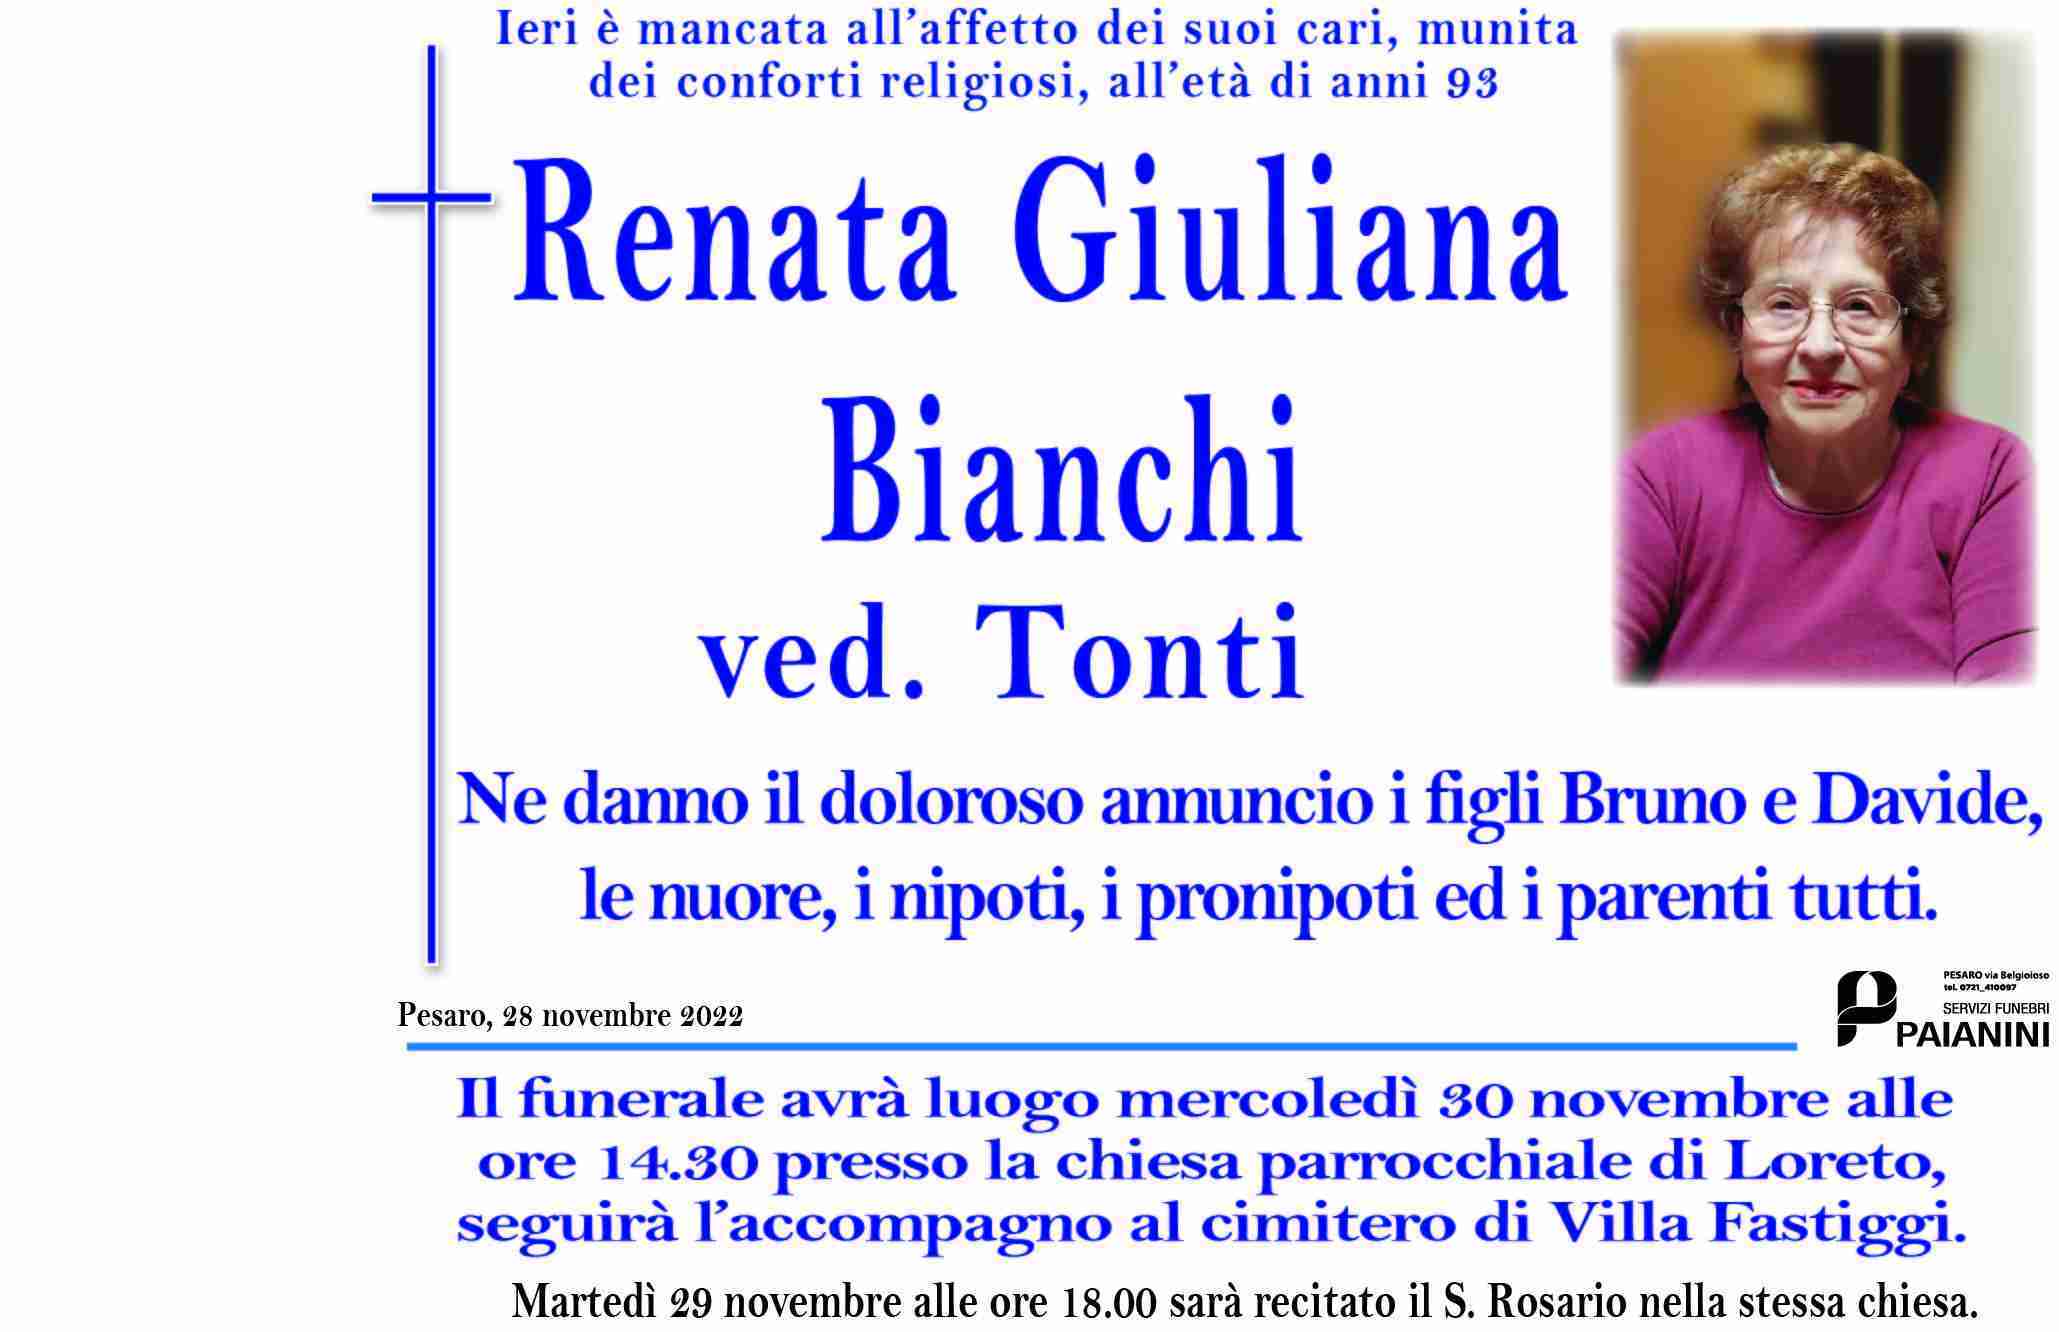 Giuliana Renata Bianchi